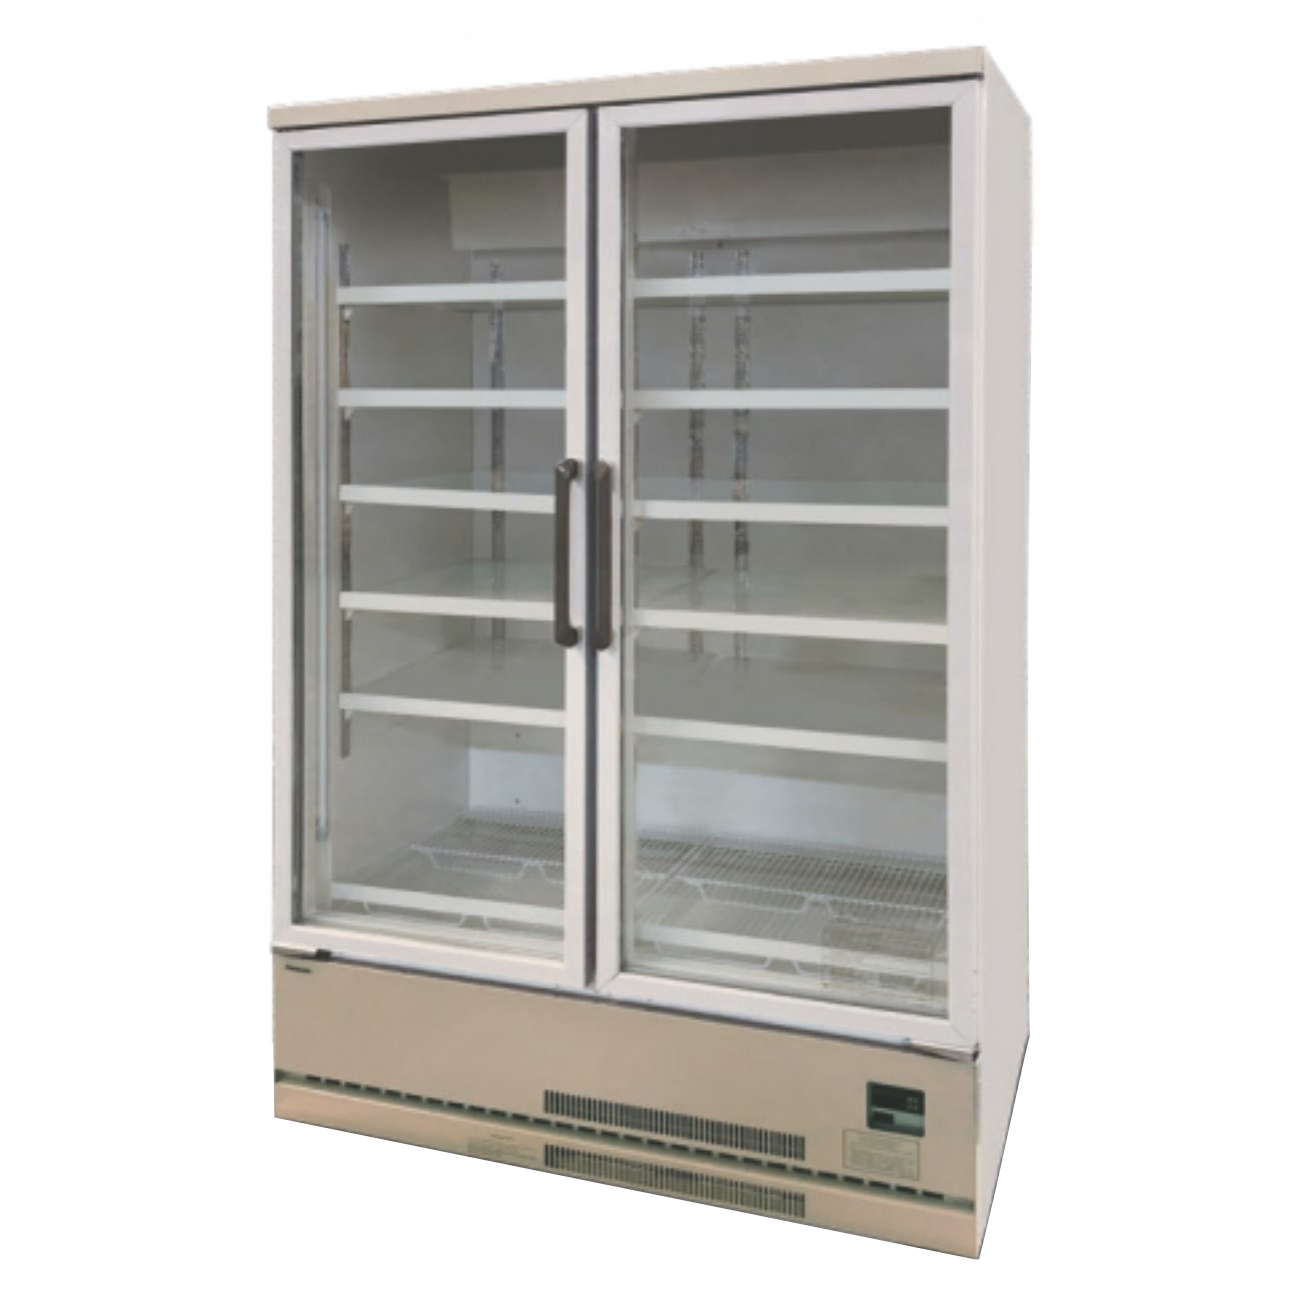 PANASONIC 直立式展示冷凍櫃 SRM-CD471-L